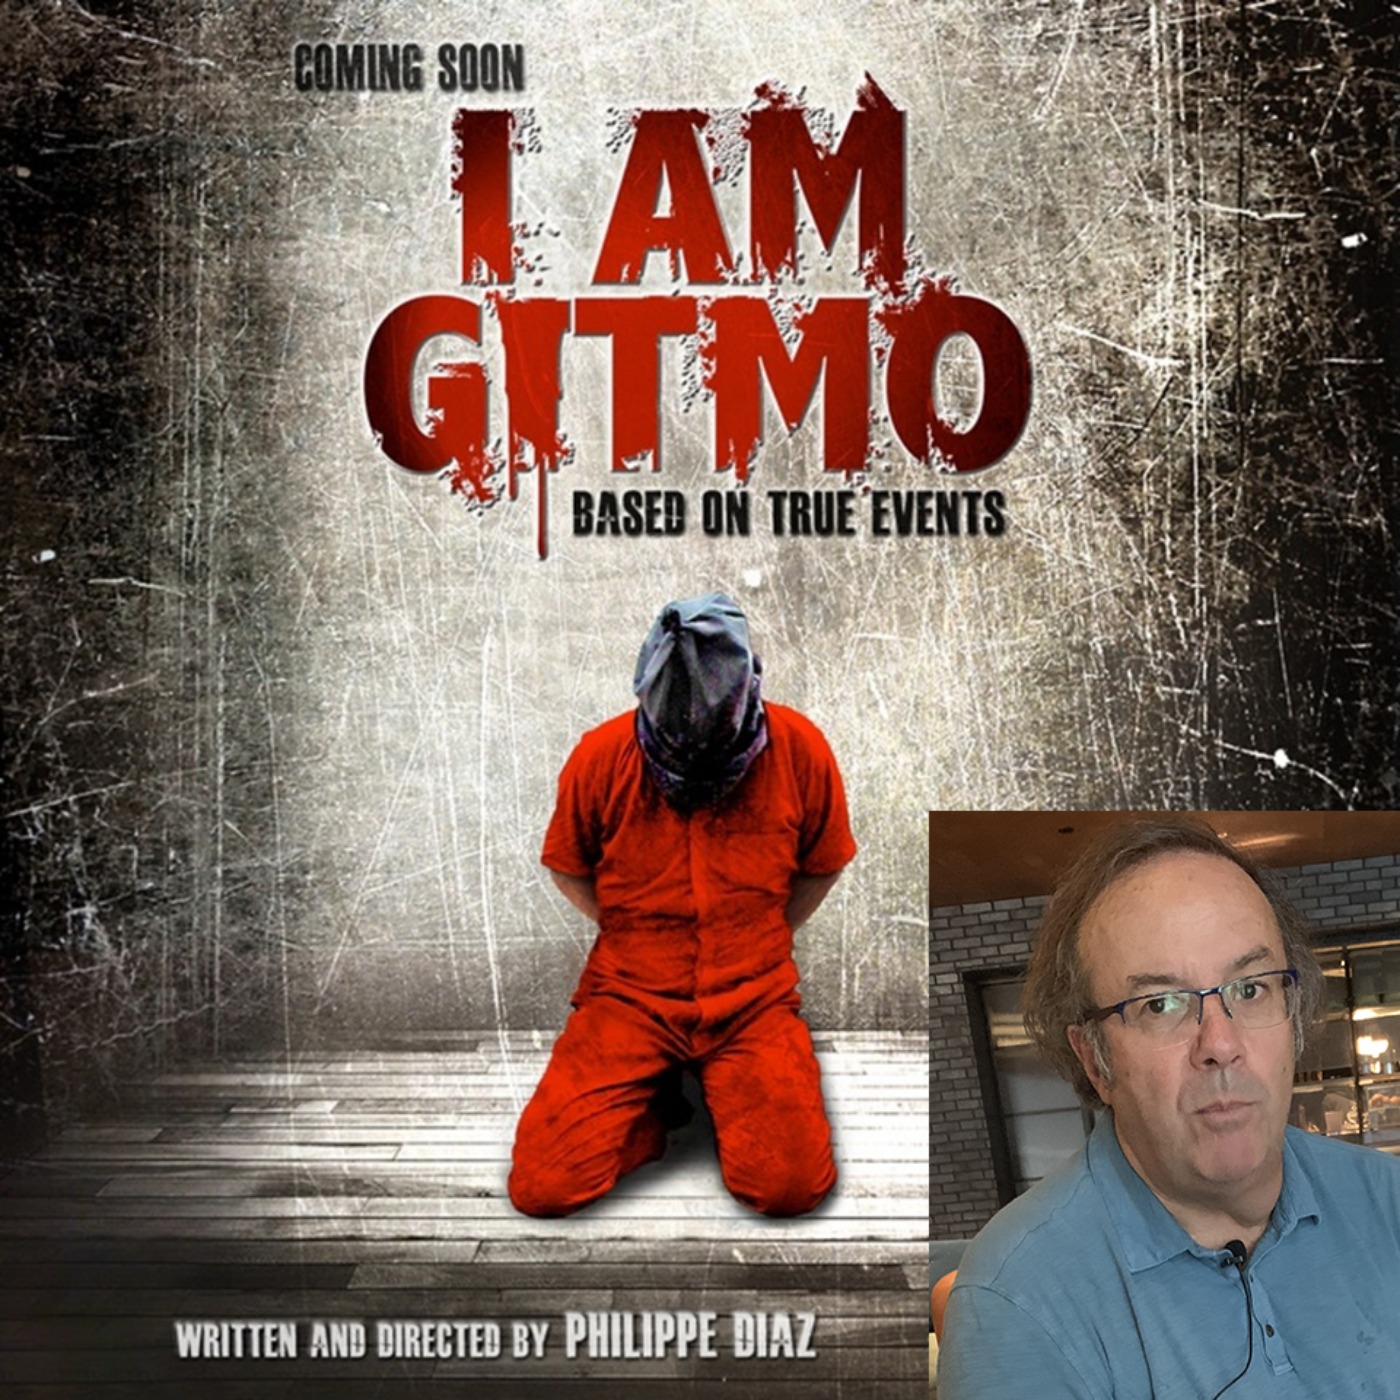 cover art for "I Am Gitmo": A conversation with film director Philippe Diaz